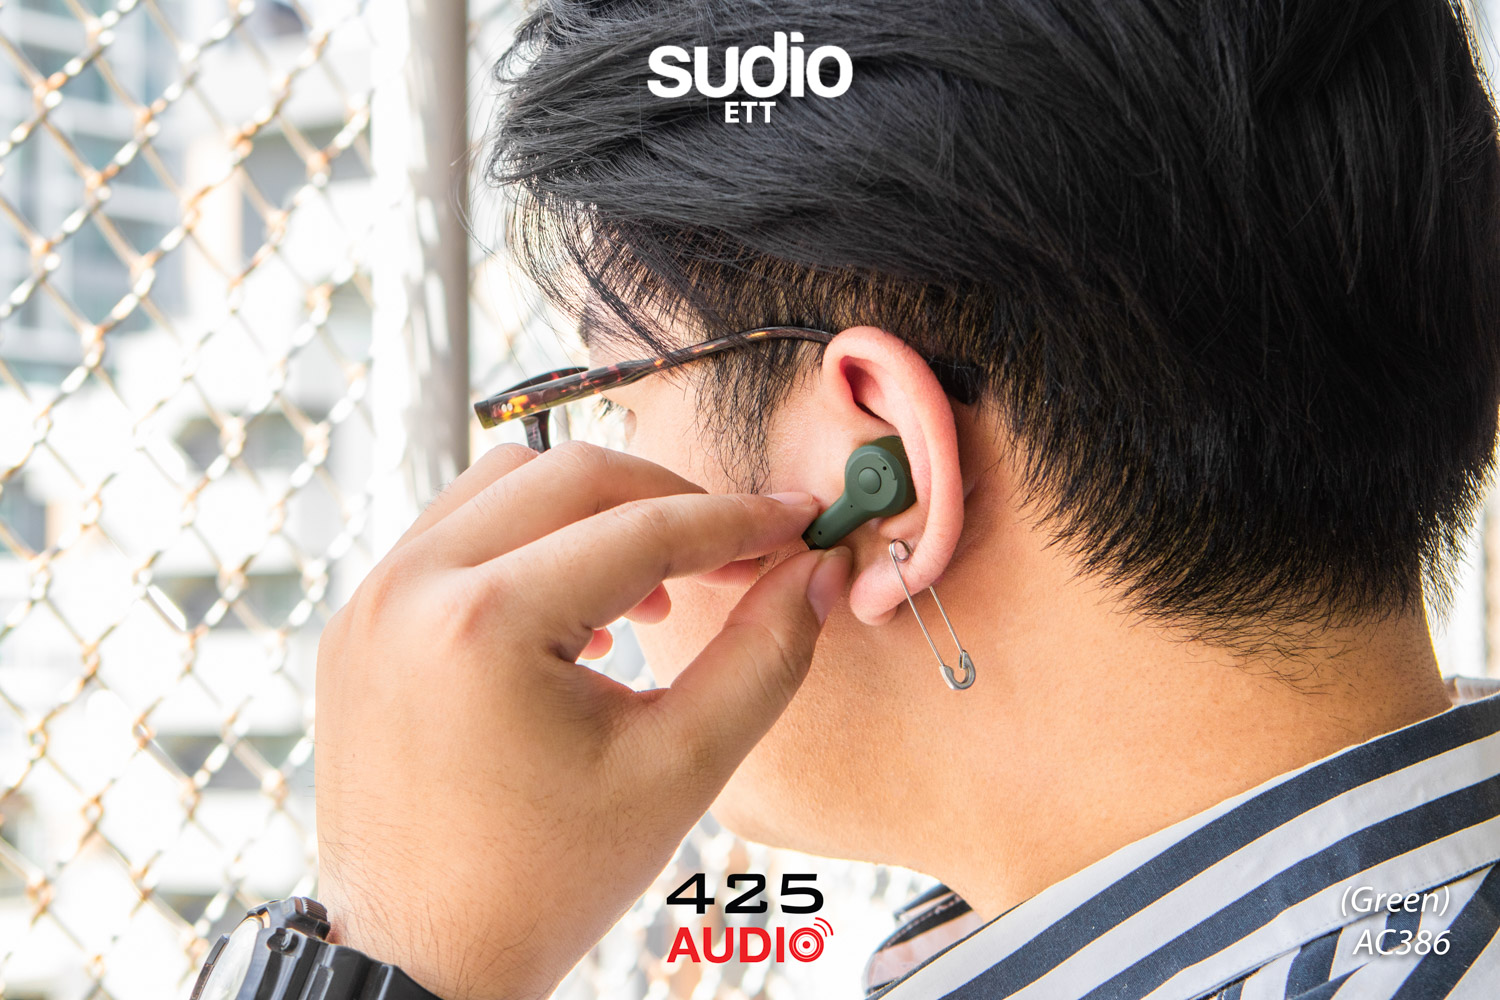 sudio ett,หูฟังไร้สายฯ,หูฟัง true wireless,ดีไซน์สวย,active noise cancelling,bluetooth 5.0,ipx5,ดูดเสียงรอบข้าง,กันเสียงรอบข้าง,กันนํ้า,ใส่ออกกำลังกายได้,ไมค์ 4 ตัว